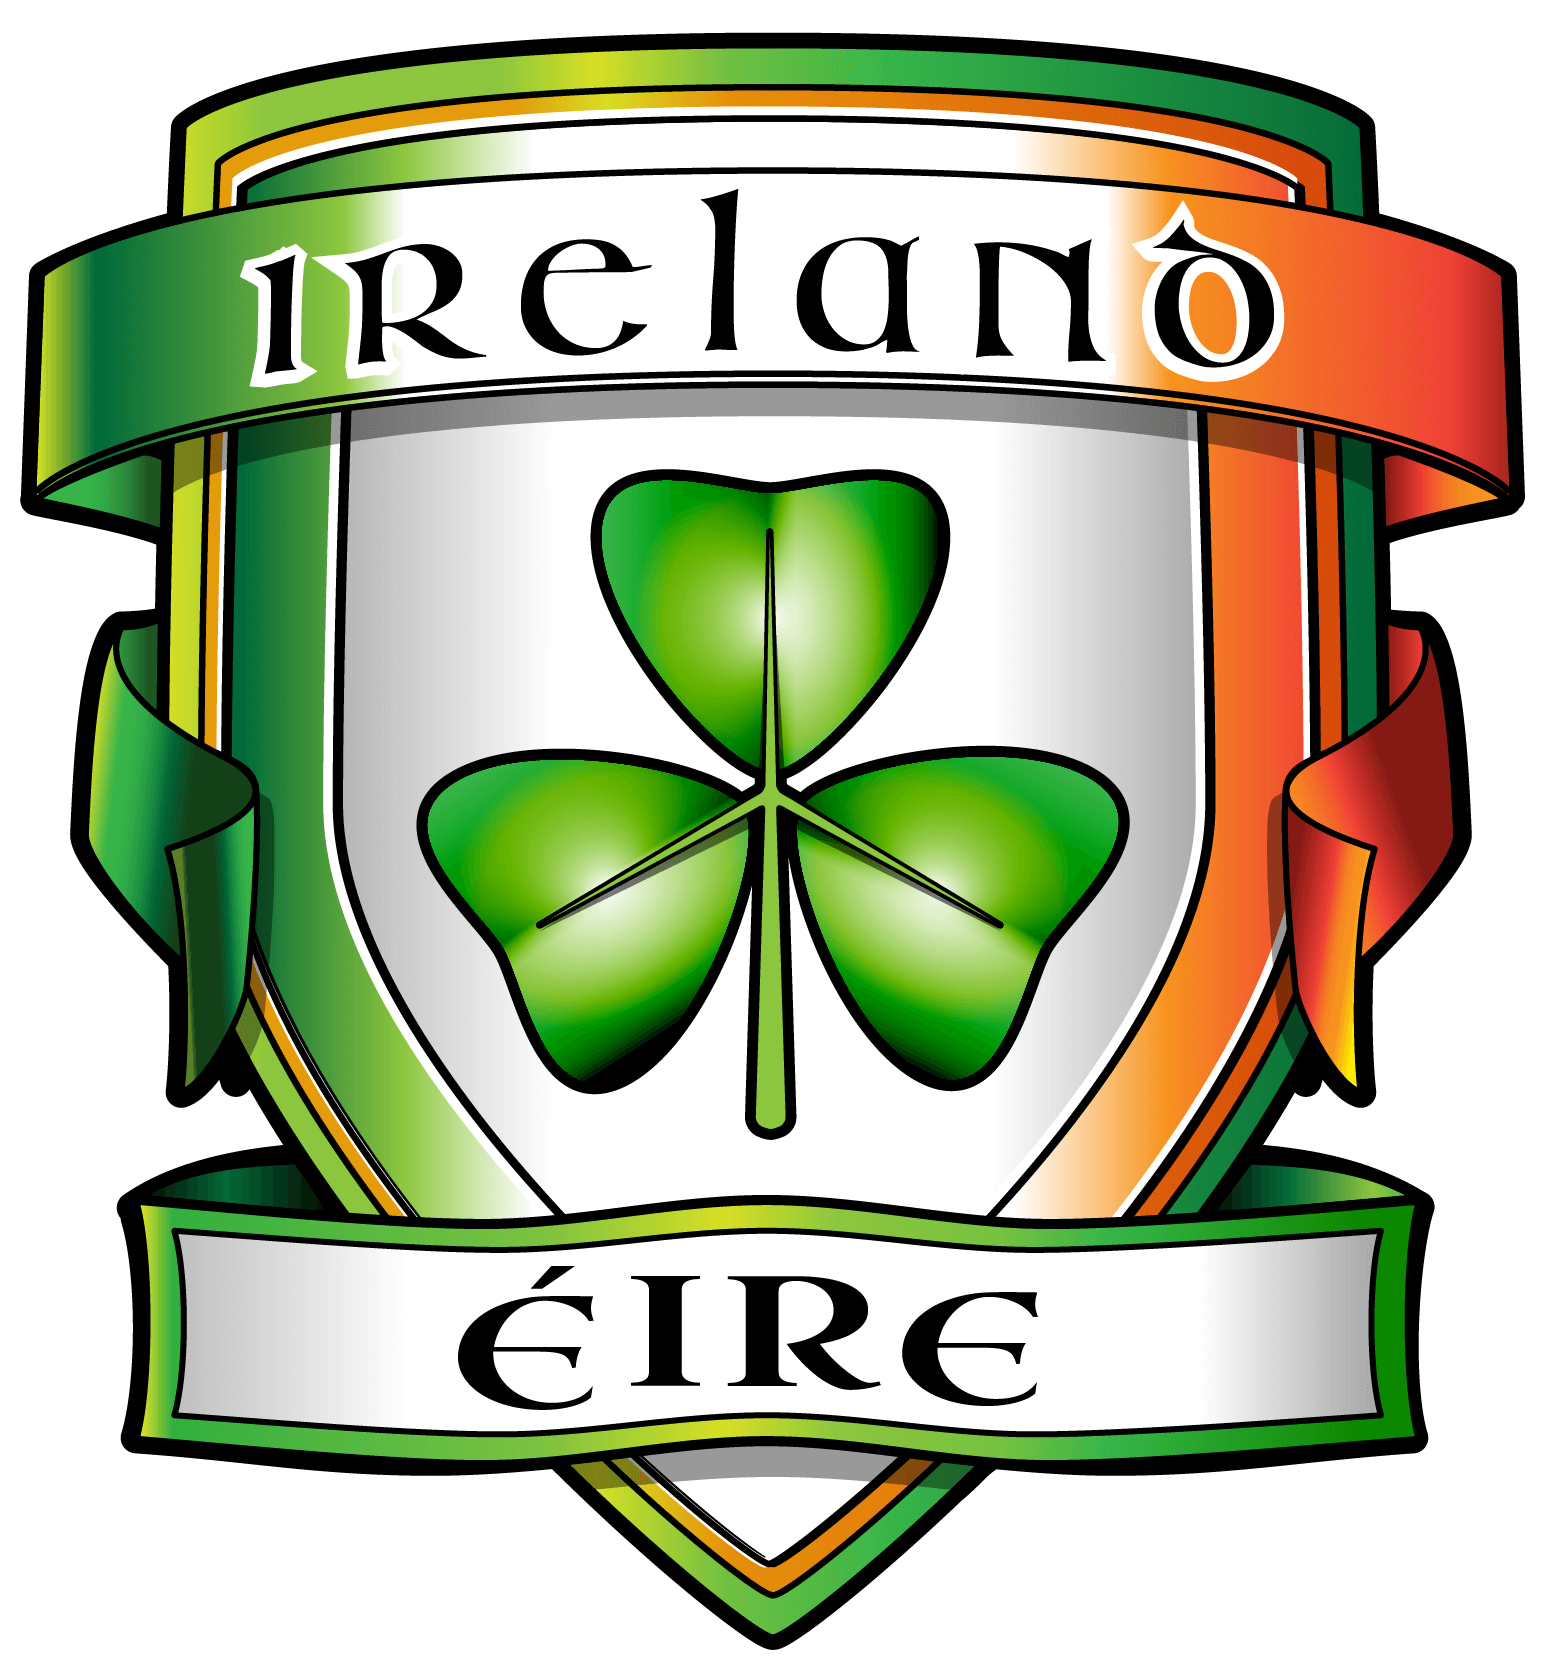 Irish Football Team Logos